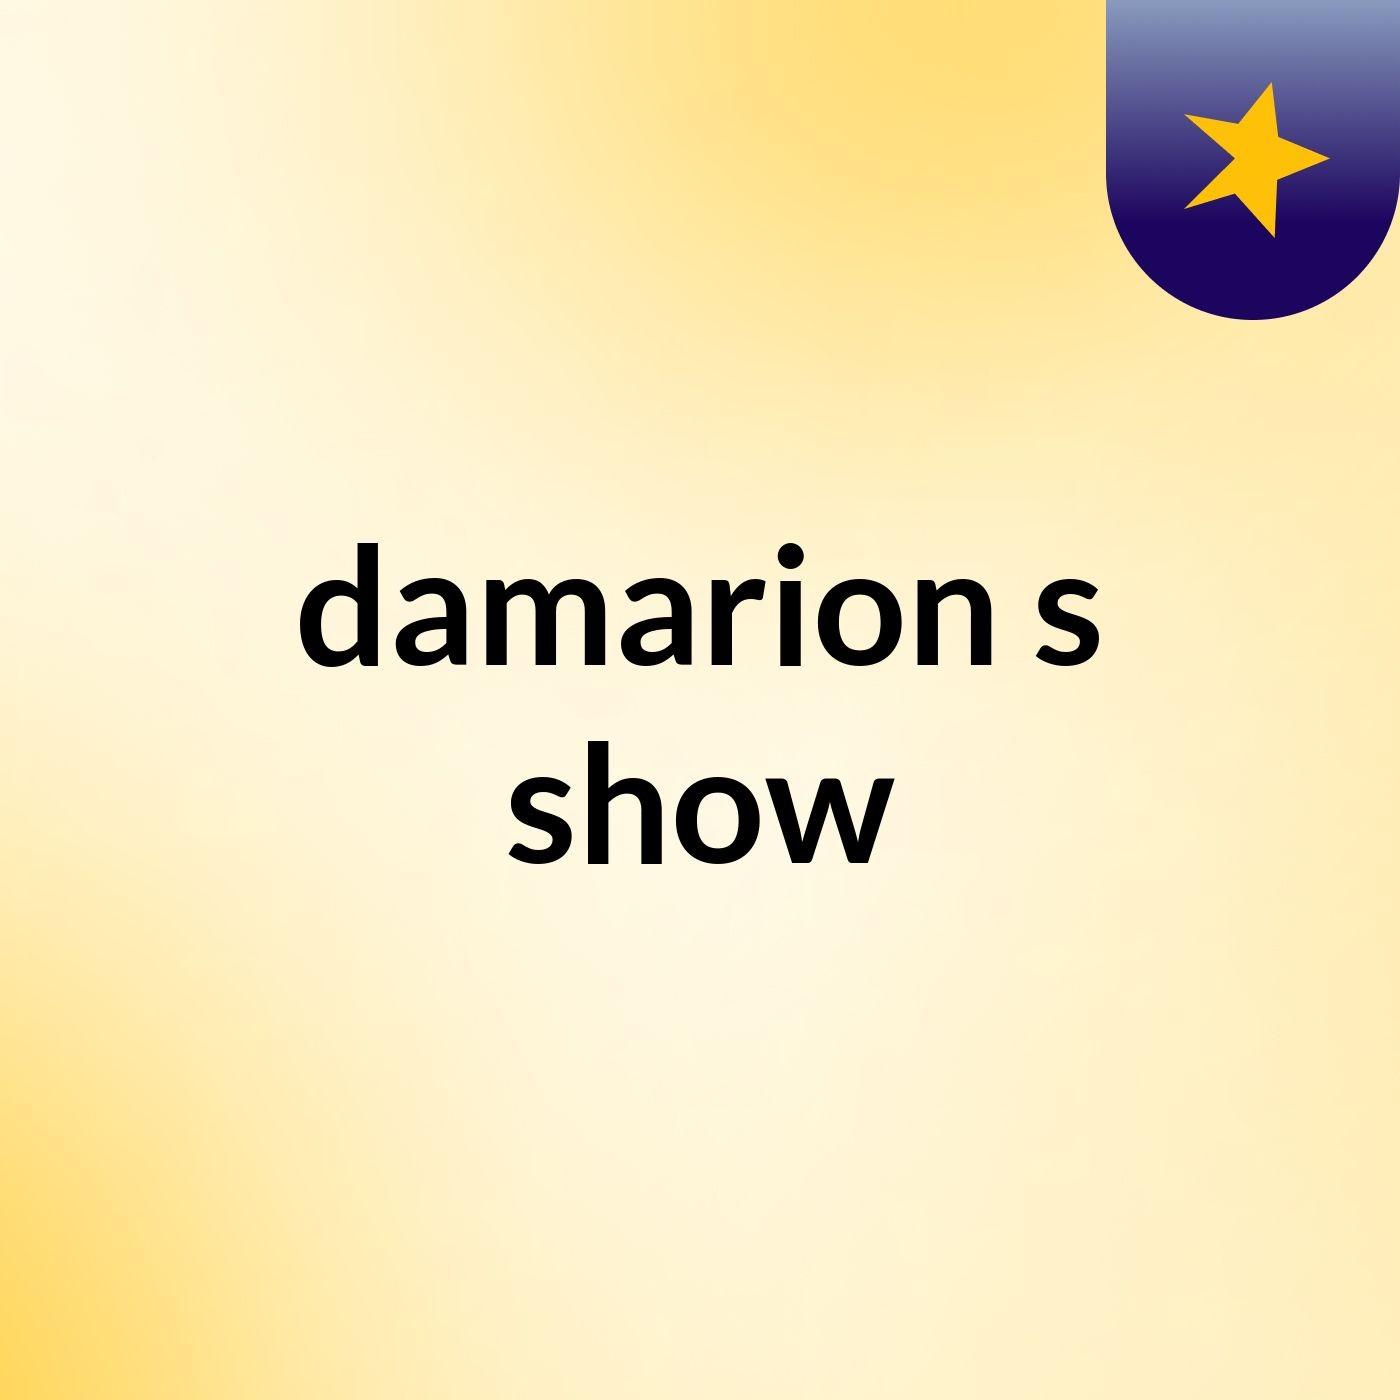 Episode 4 - damarion's show